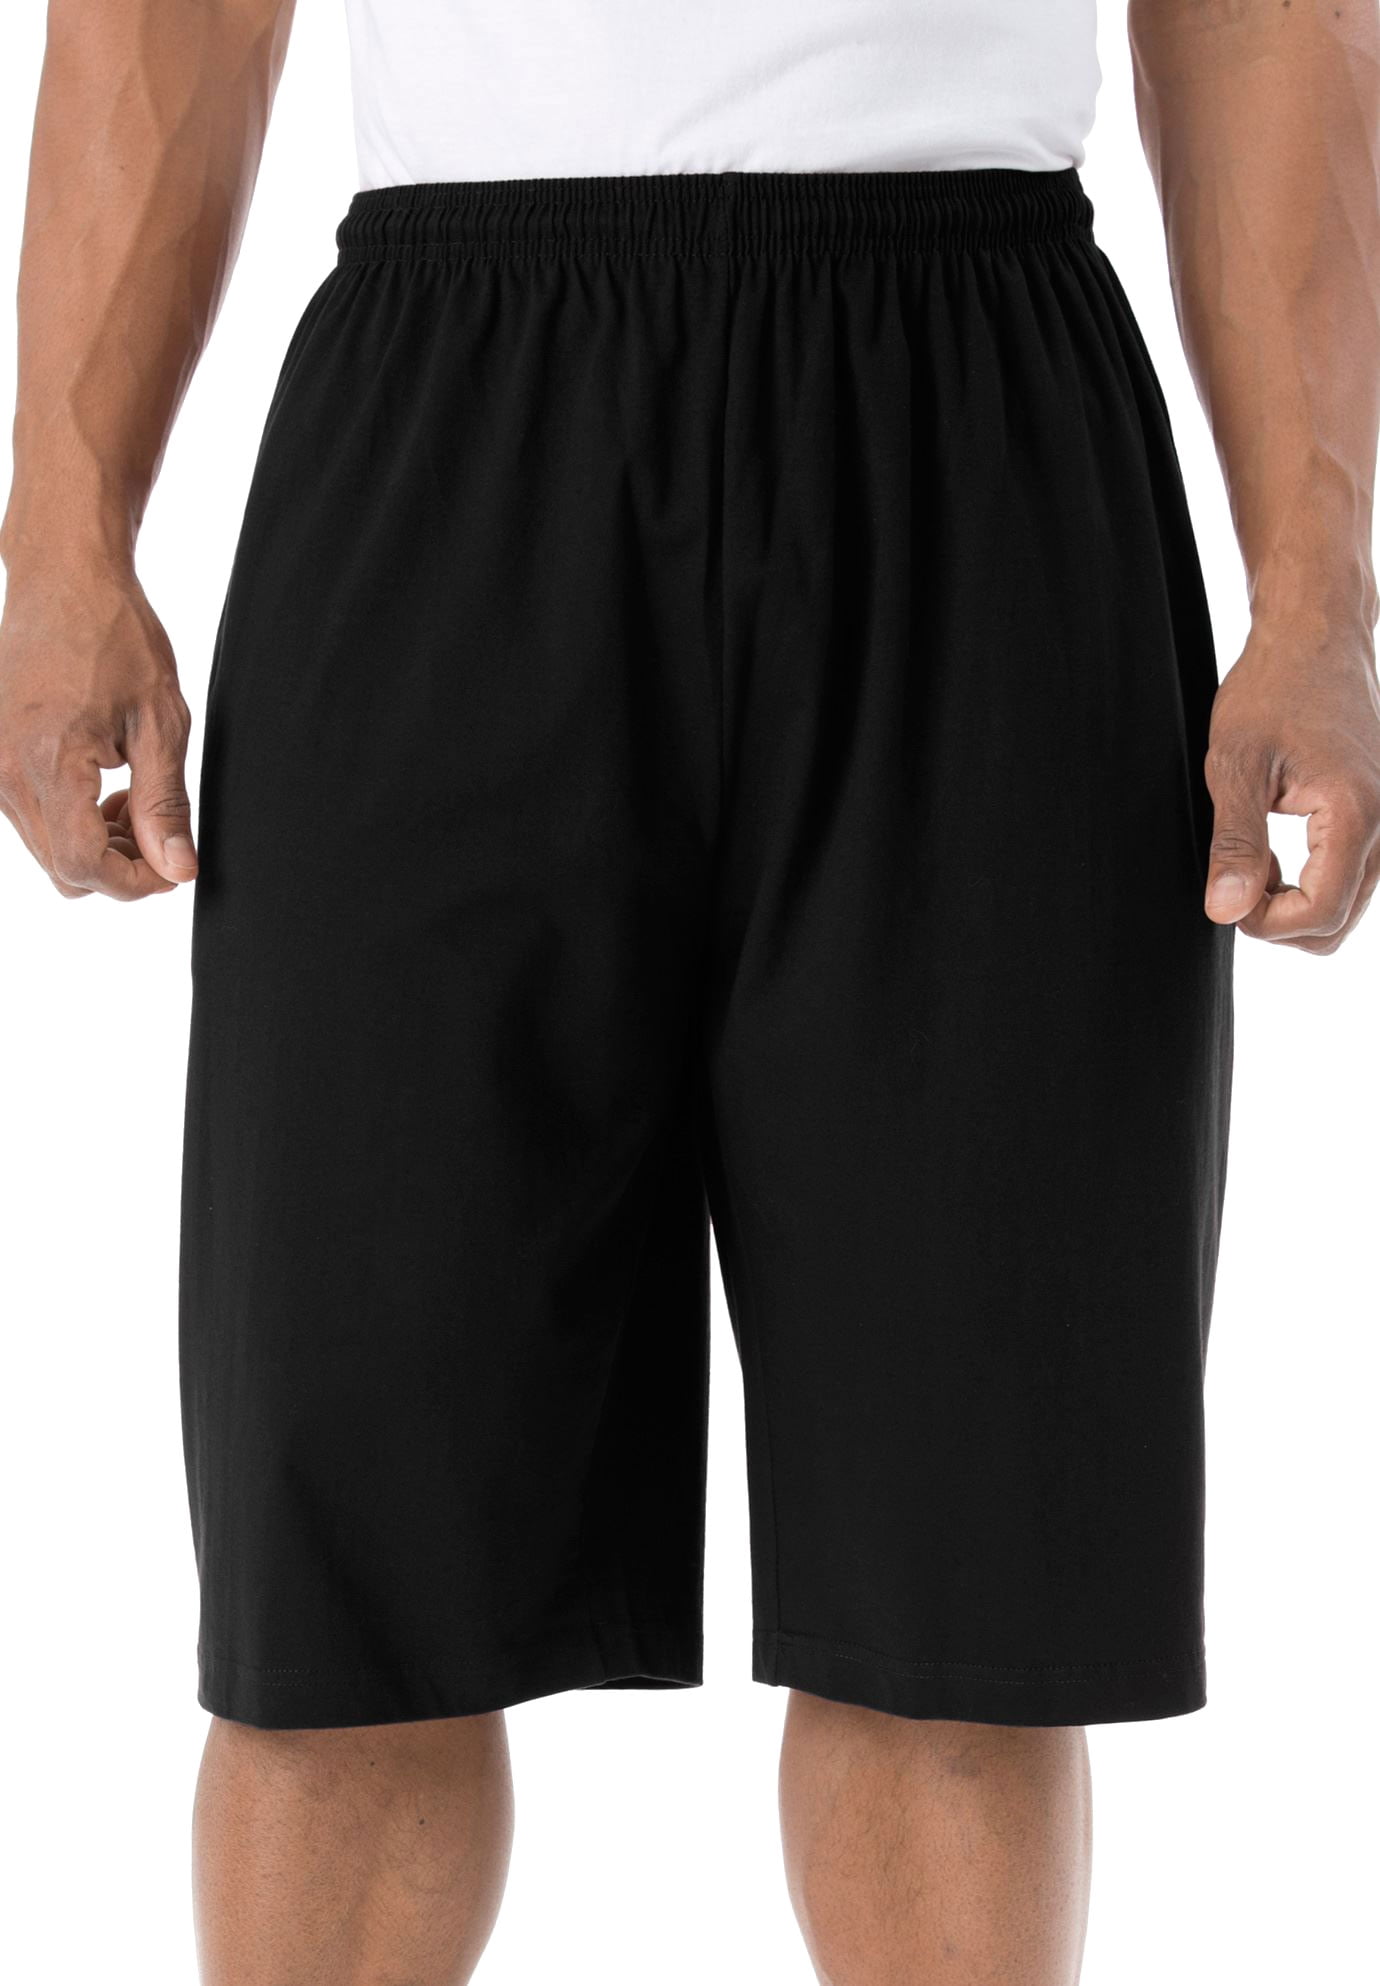 iNewbetter Mens Shorts Breathable Big and Tall Elastic Waist Drawstring Casual Athletic Shorts 